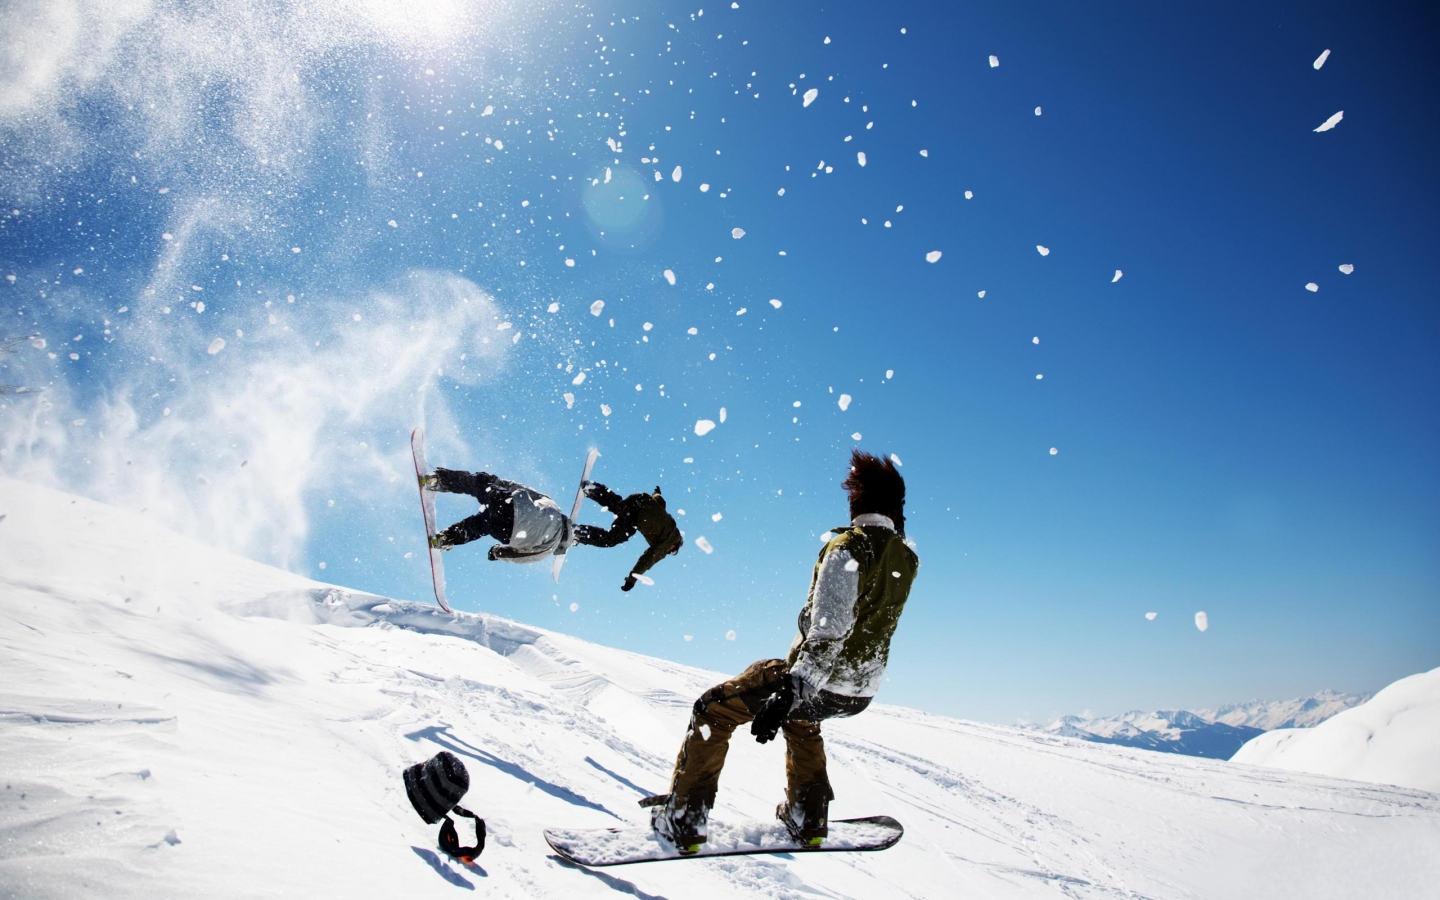 Winter Snowboarding for 1440 x 900 widescreen resolution